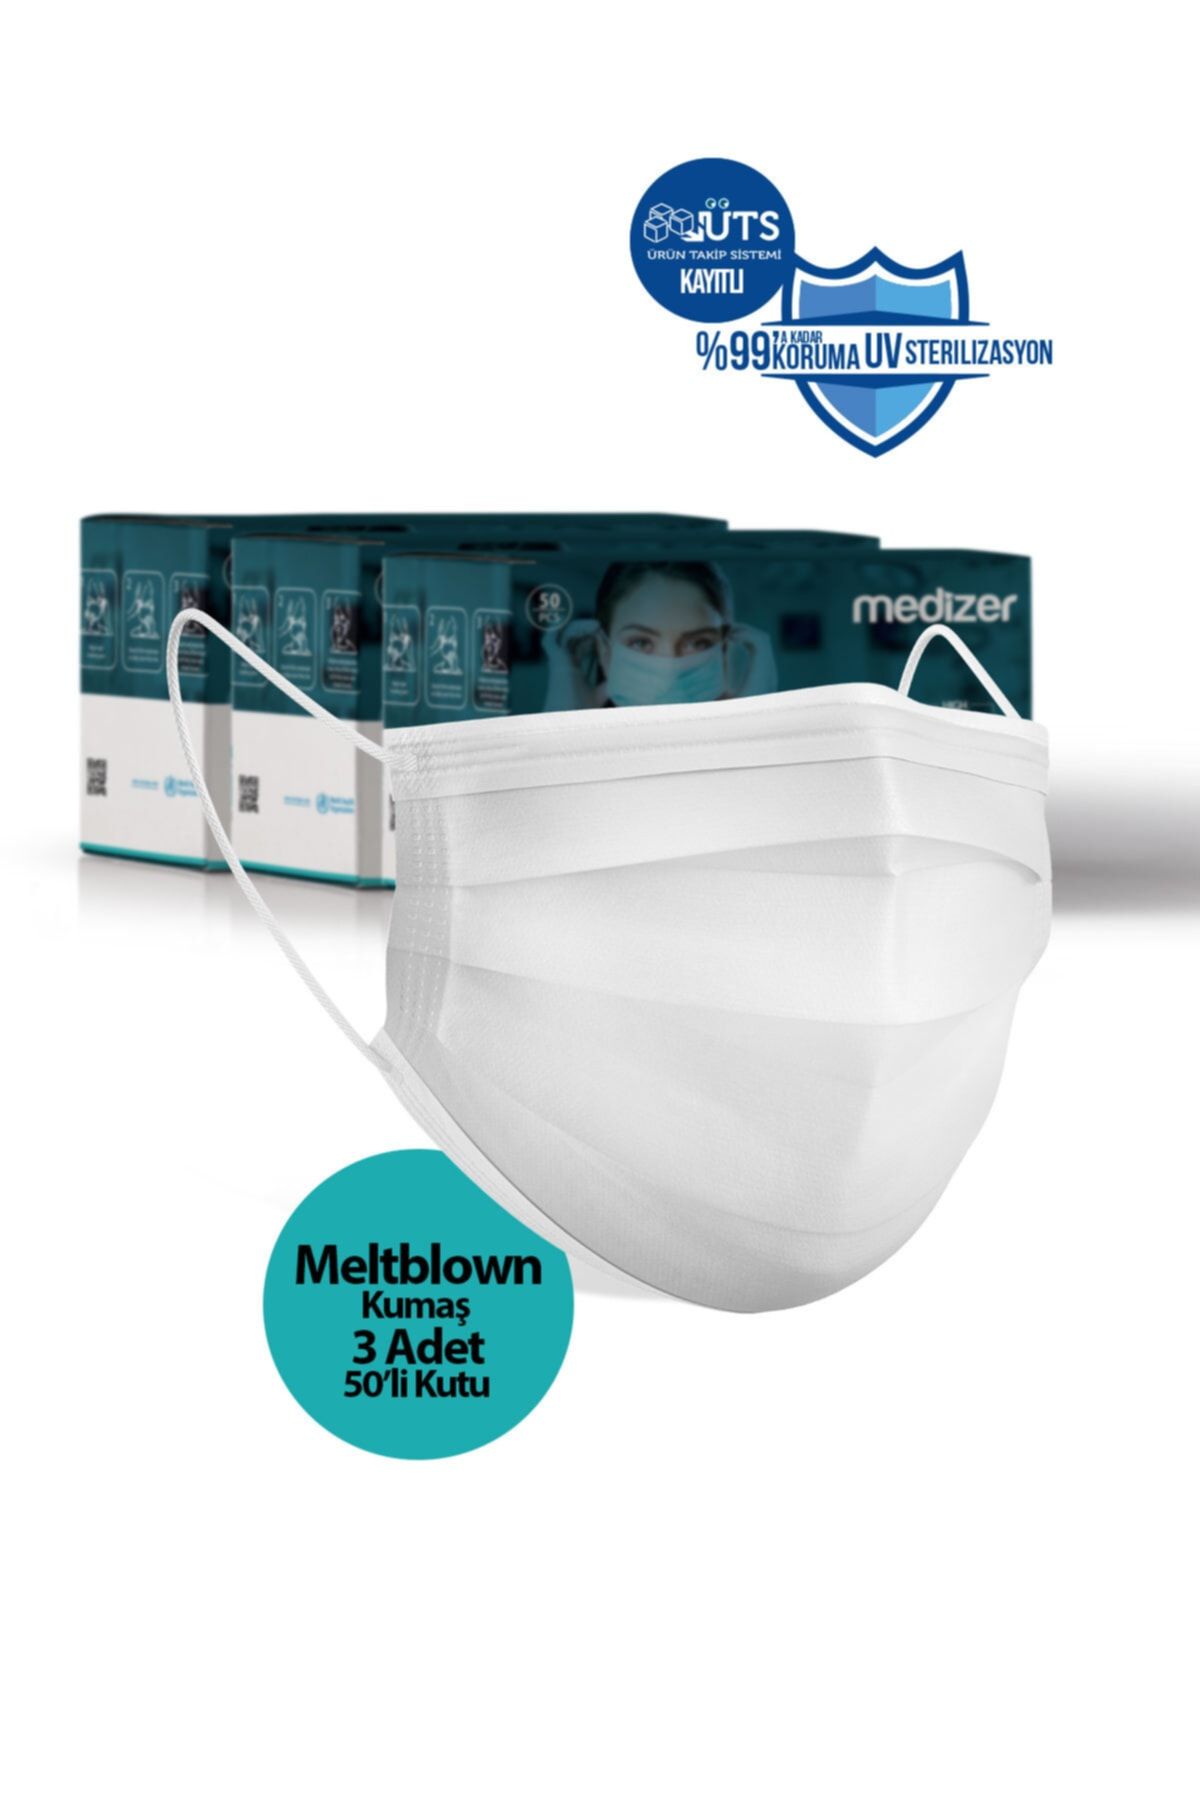 Sabomar Medizer Meltblown Beyaz Cerrahi Maske 150 Adet - Telli